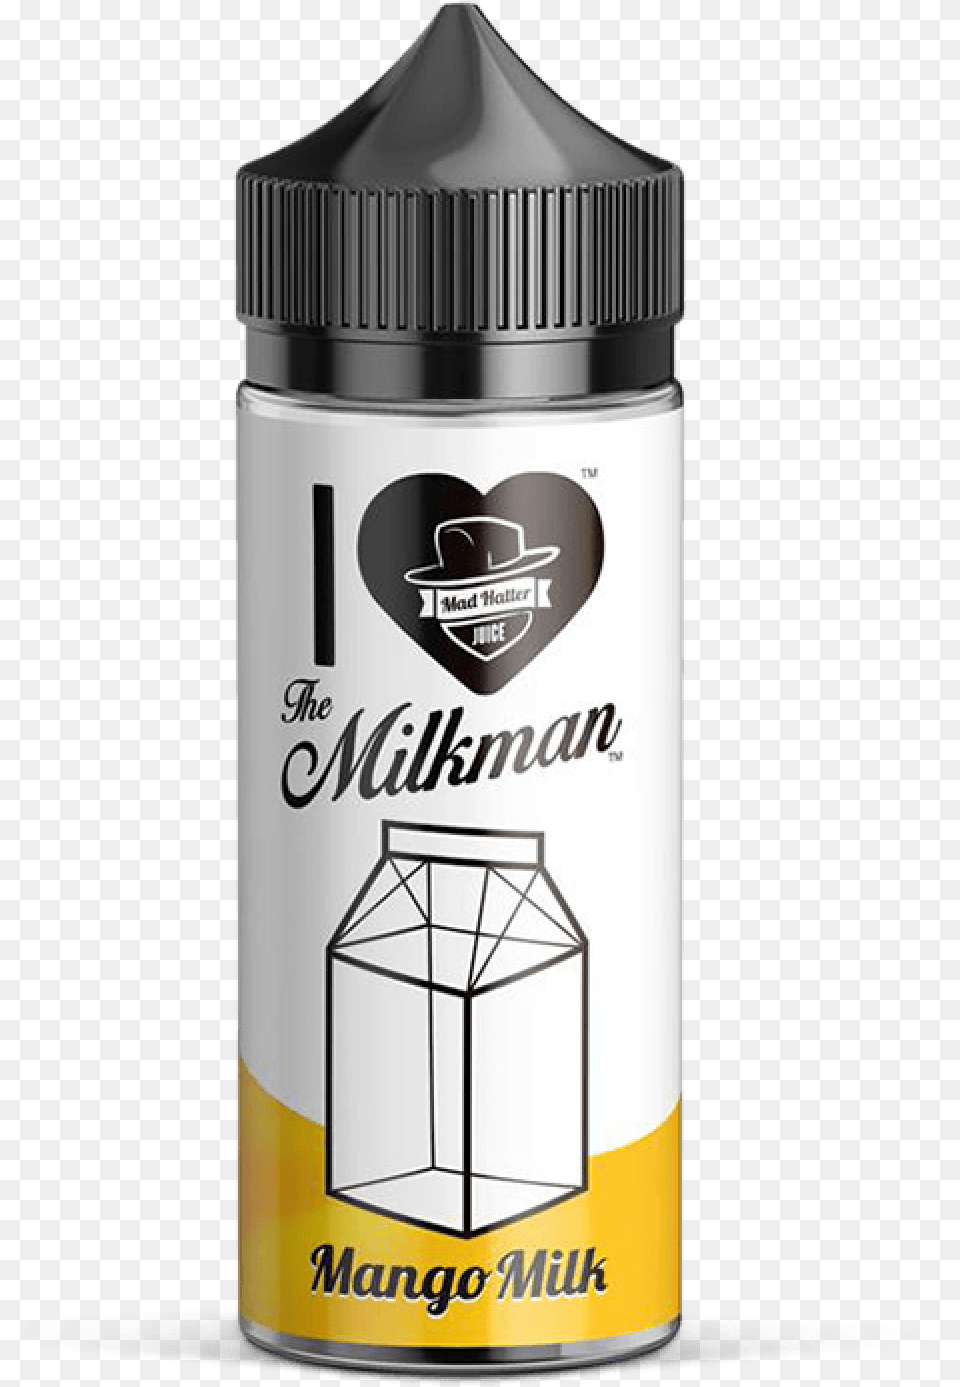 I Love The Milkman Mango Milk Love The Milkman Mango Milk, Bottle, Shaker, Tin, Jar Png Image